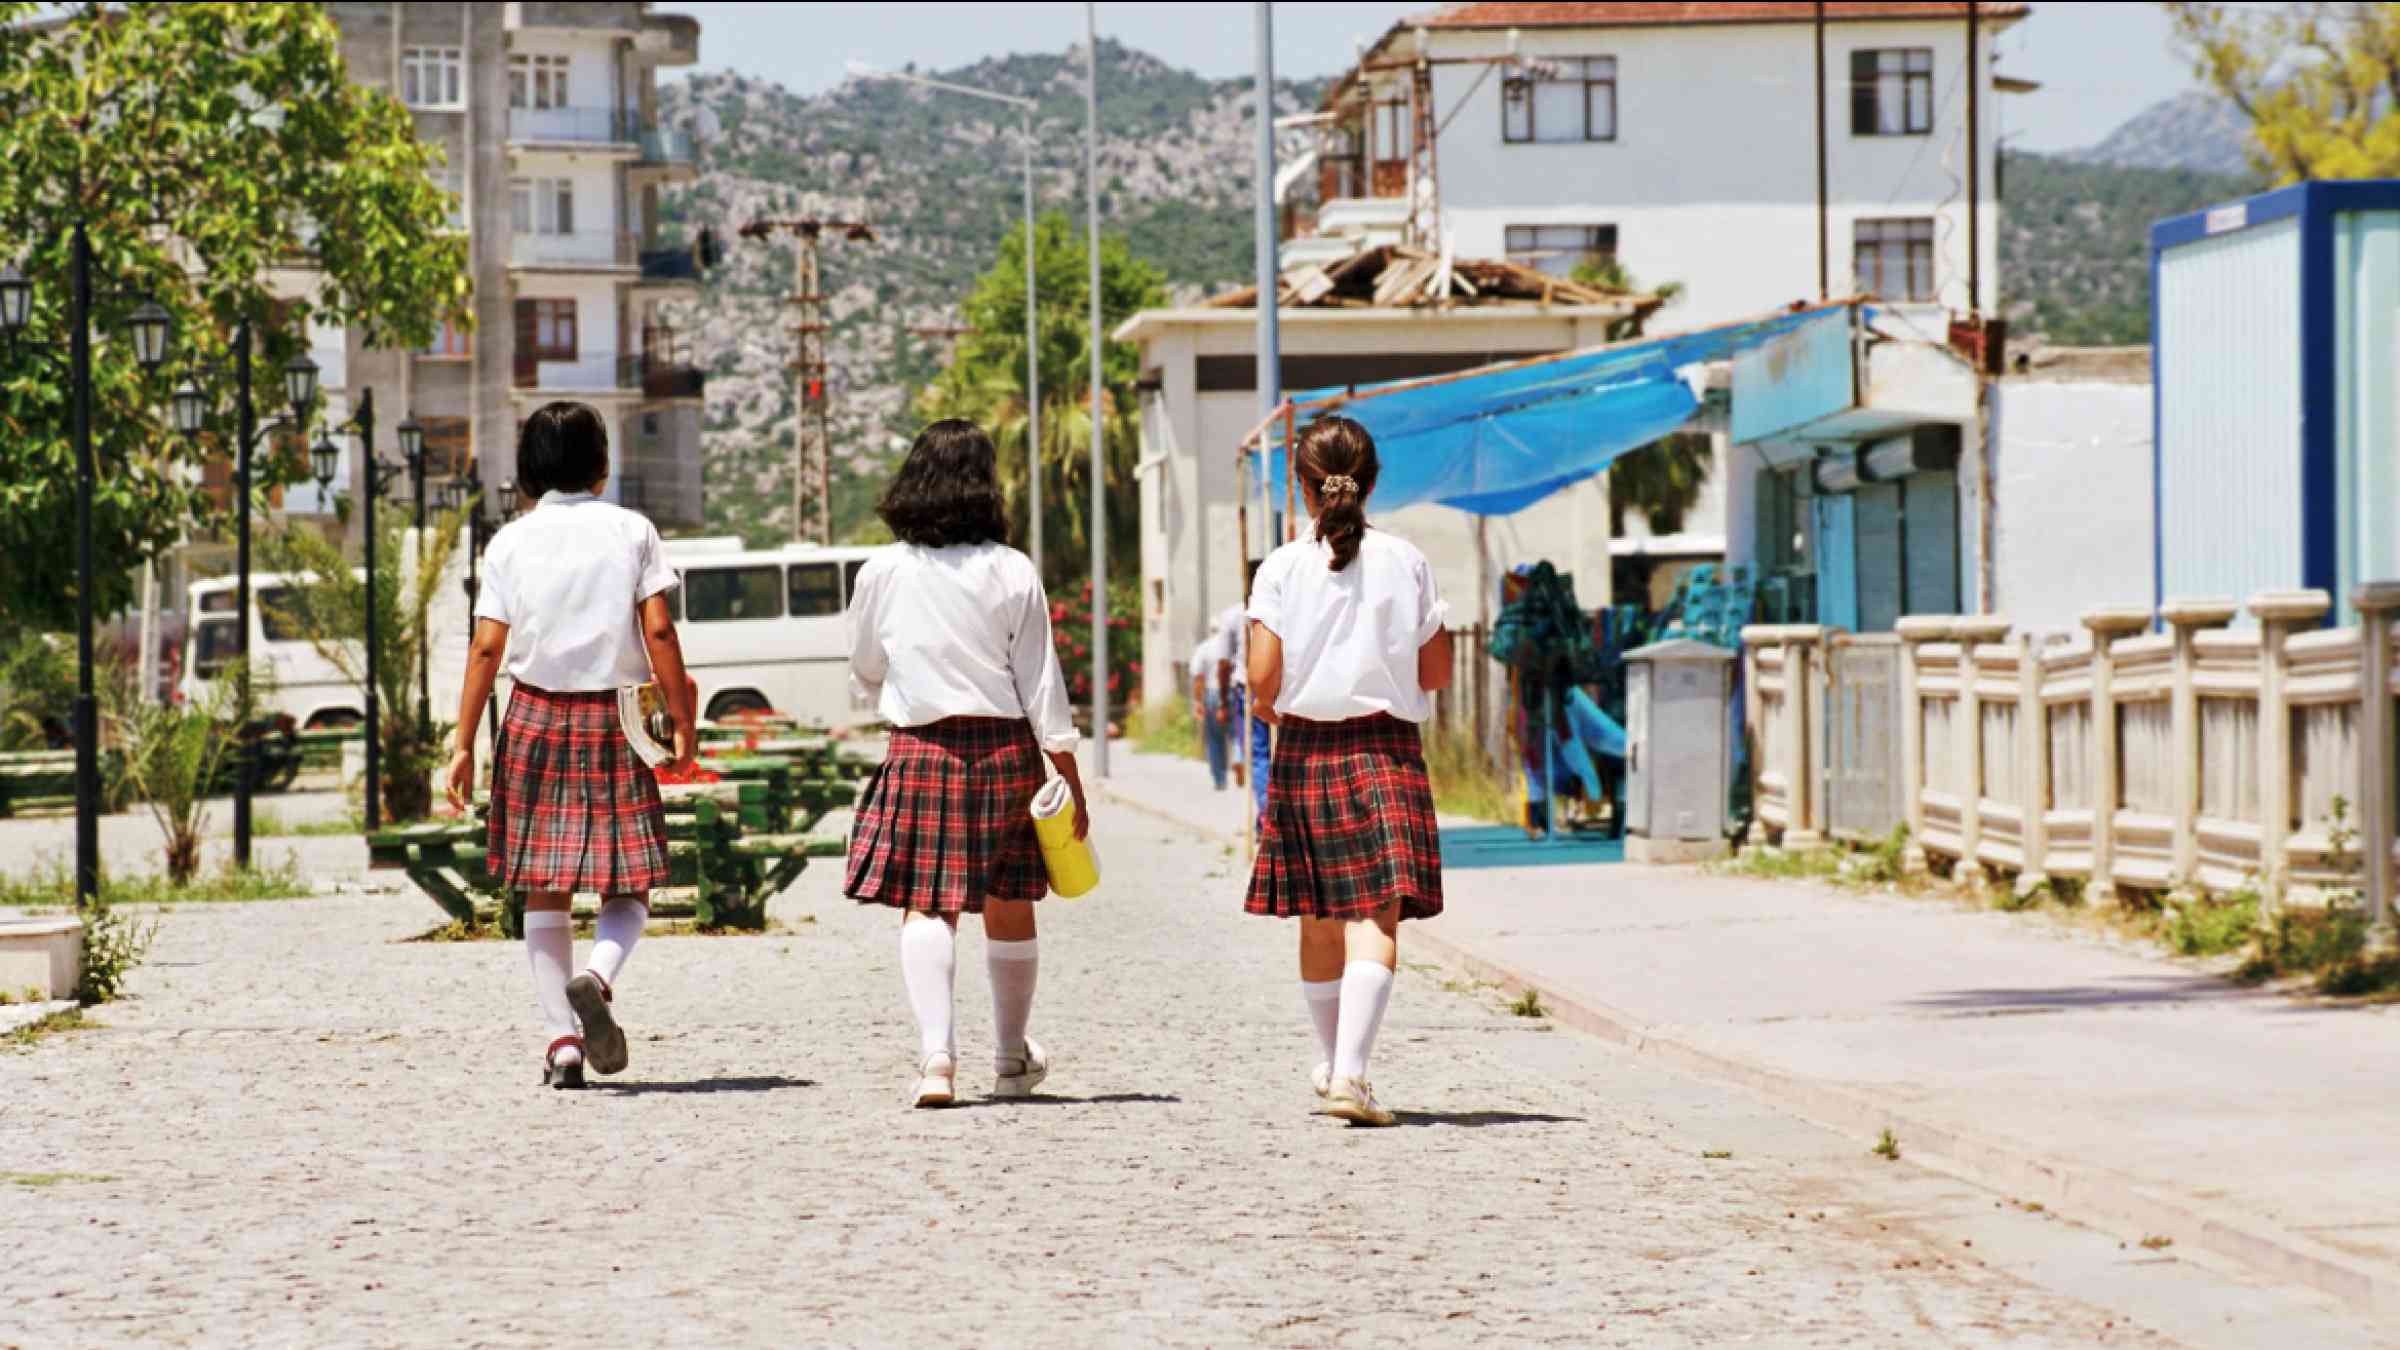 Turkish schoolgirls in uniform walking in a street